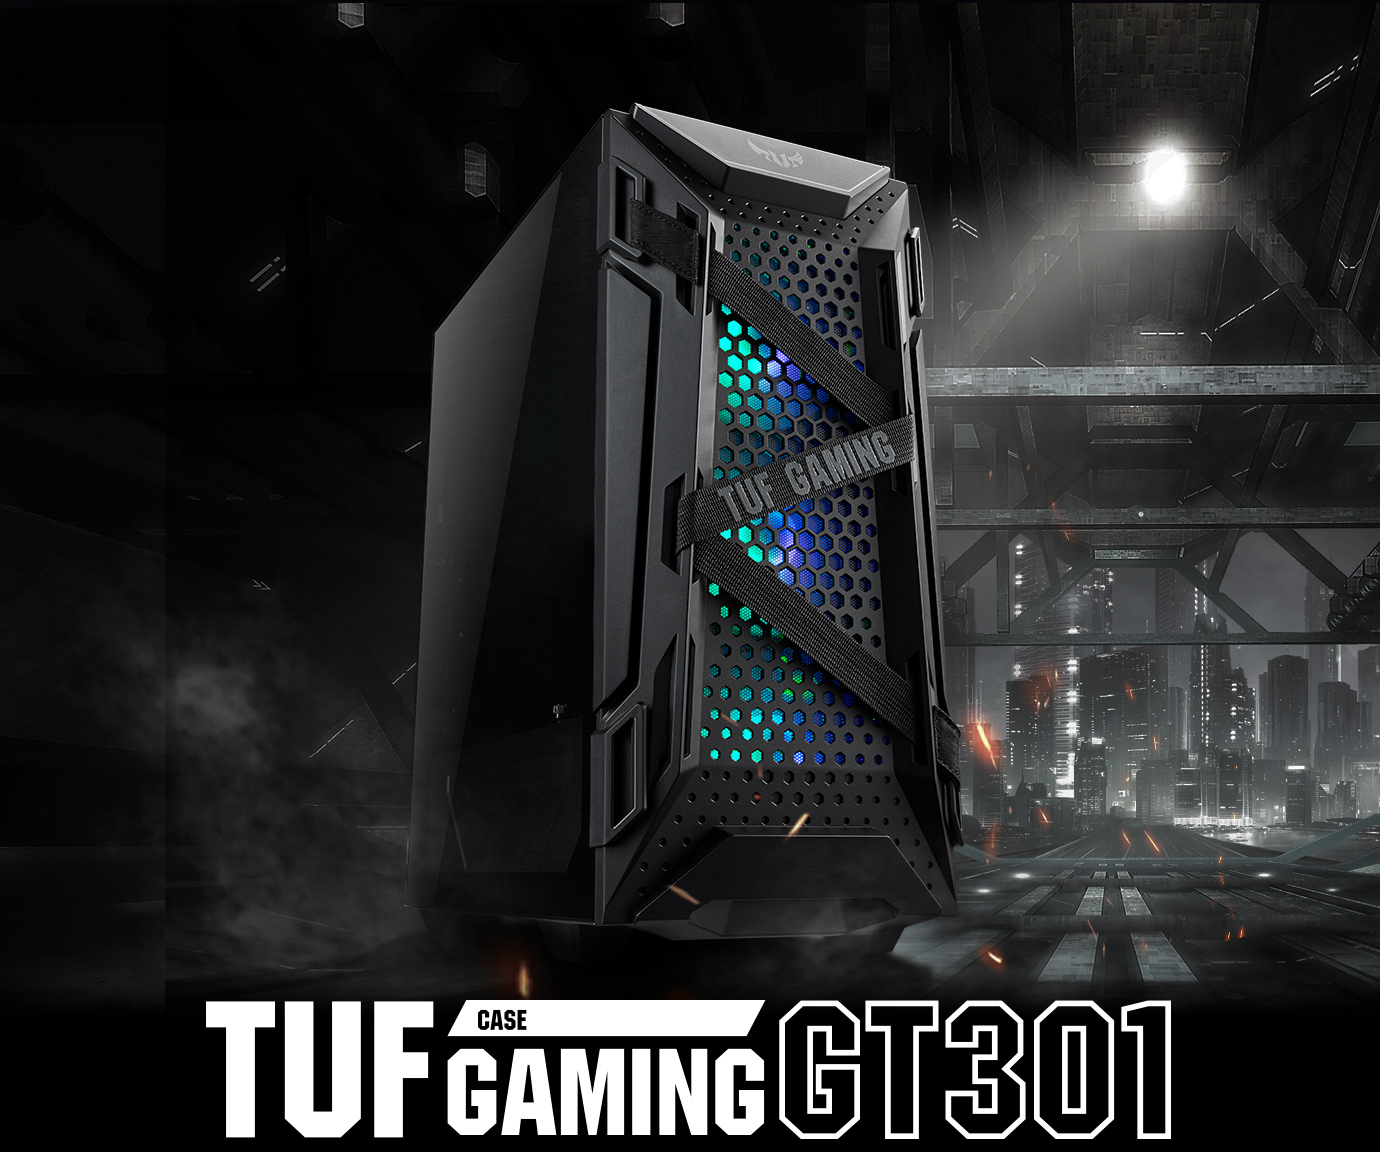 ASUS TUF Gaming GT301 gaming case product photo.